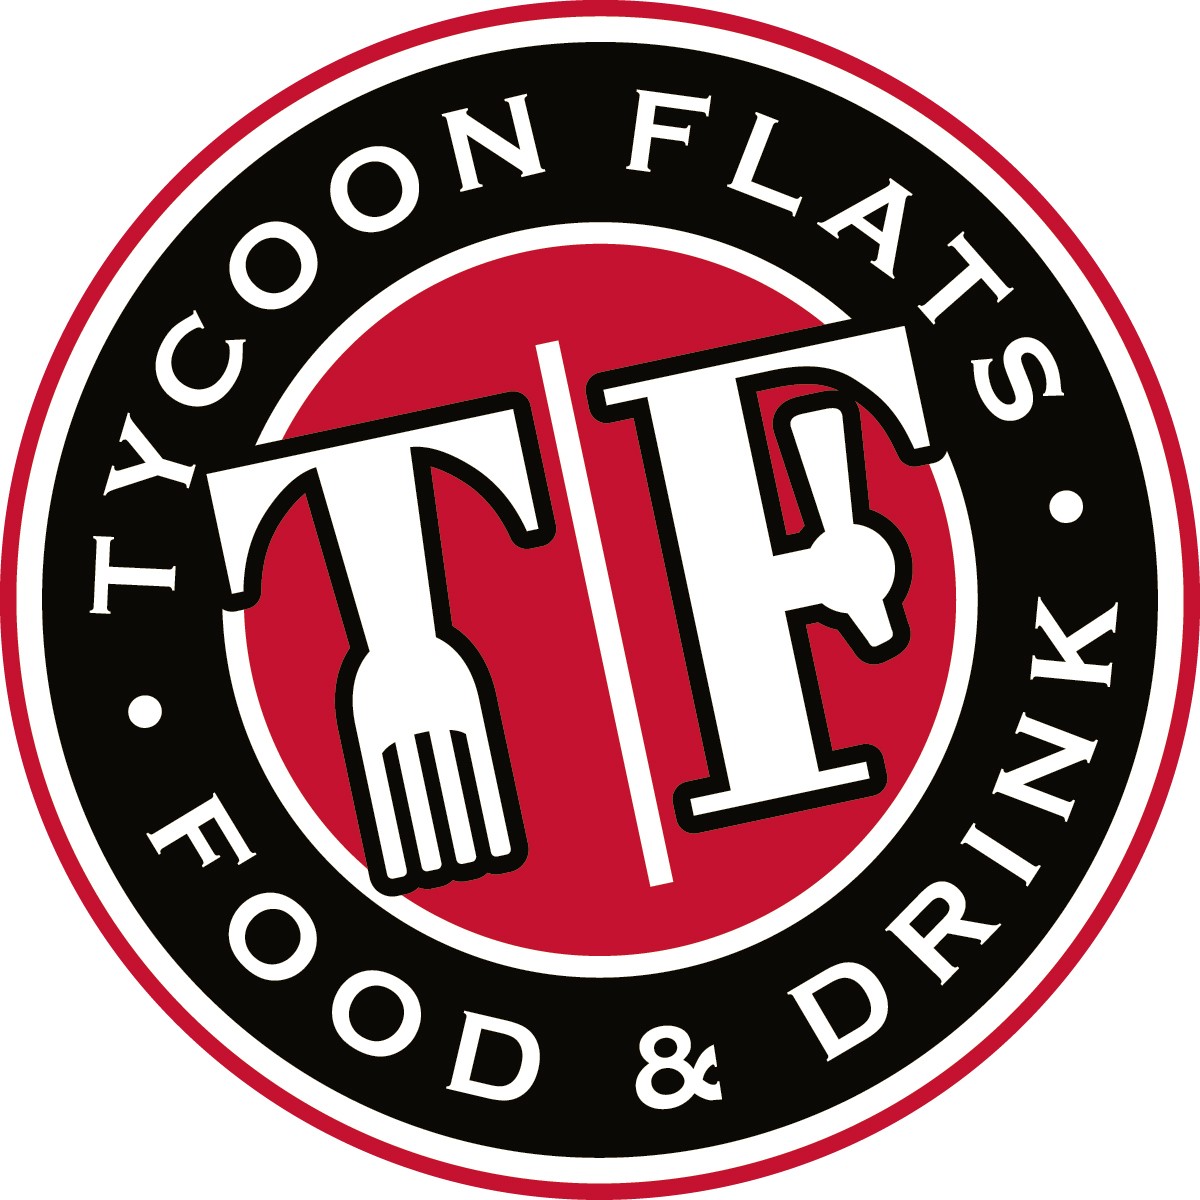 Tycoon Flats Food & Drink - N ST MARYS STRIP Tycoon Flats N ST MARYS STRIP